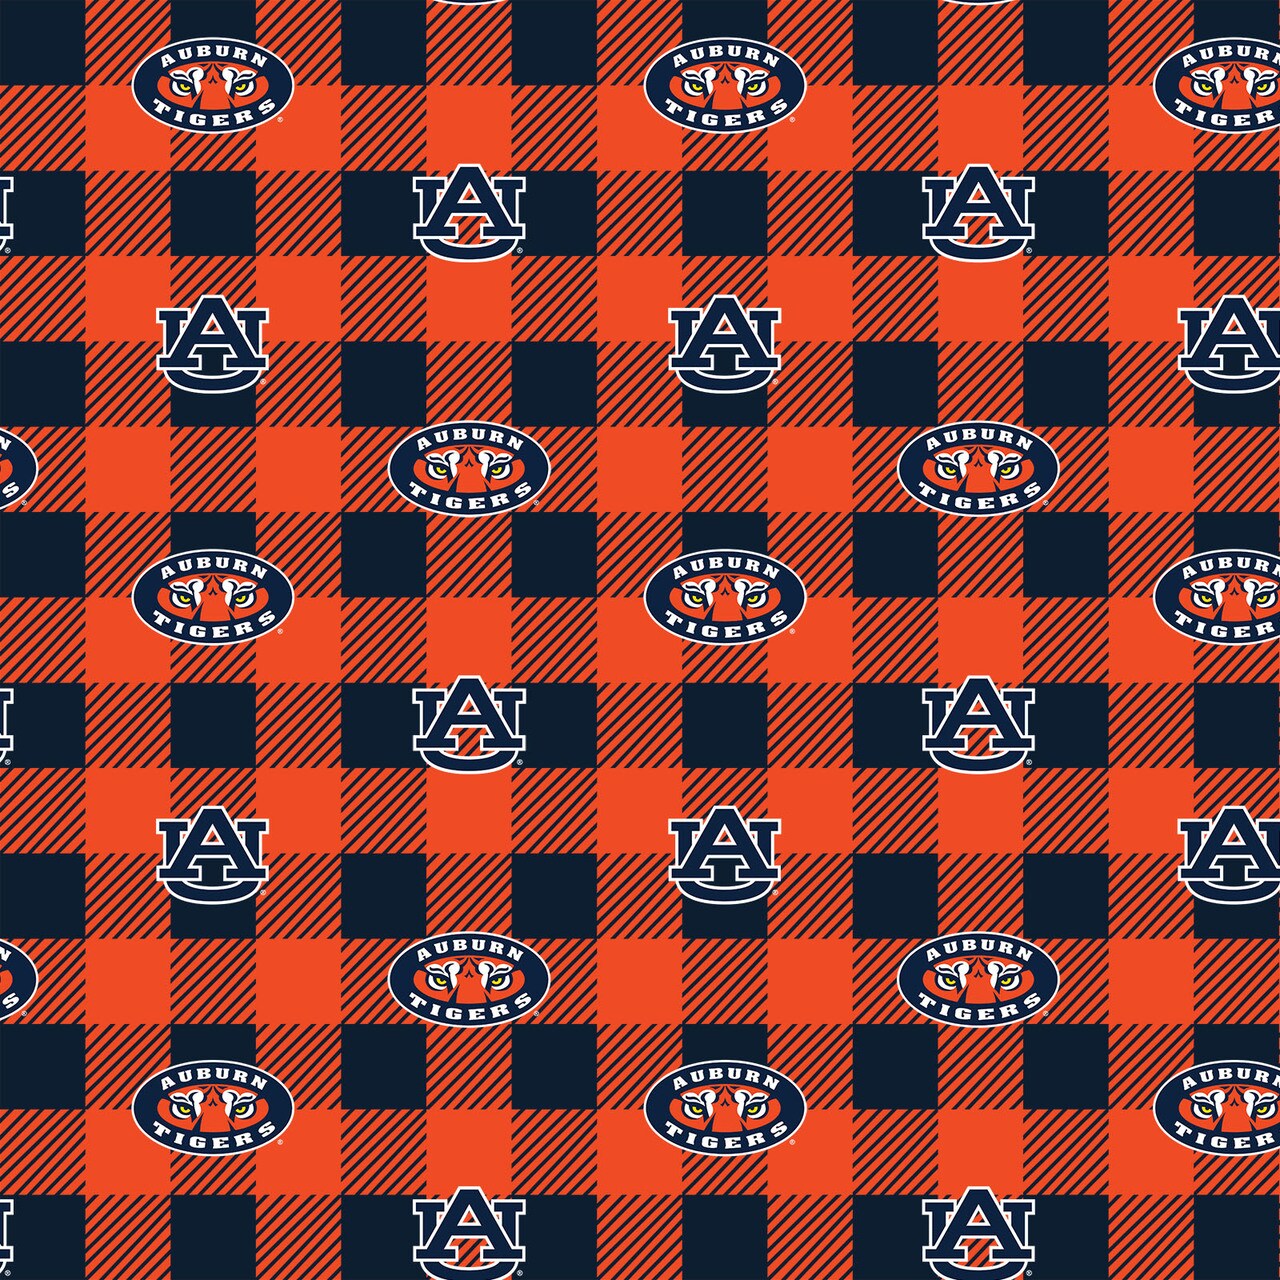 Sykel Enterprises-Auburn University Fleece Fabric-Auburn Tigers Buffalo Plaid Fleece Blanket Fabric-Sold by the yard